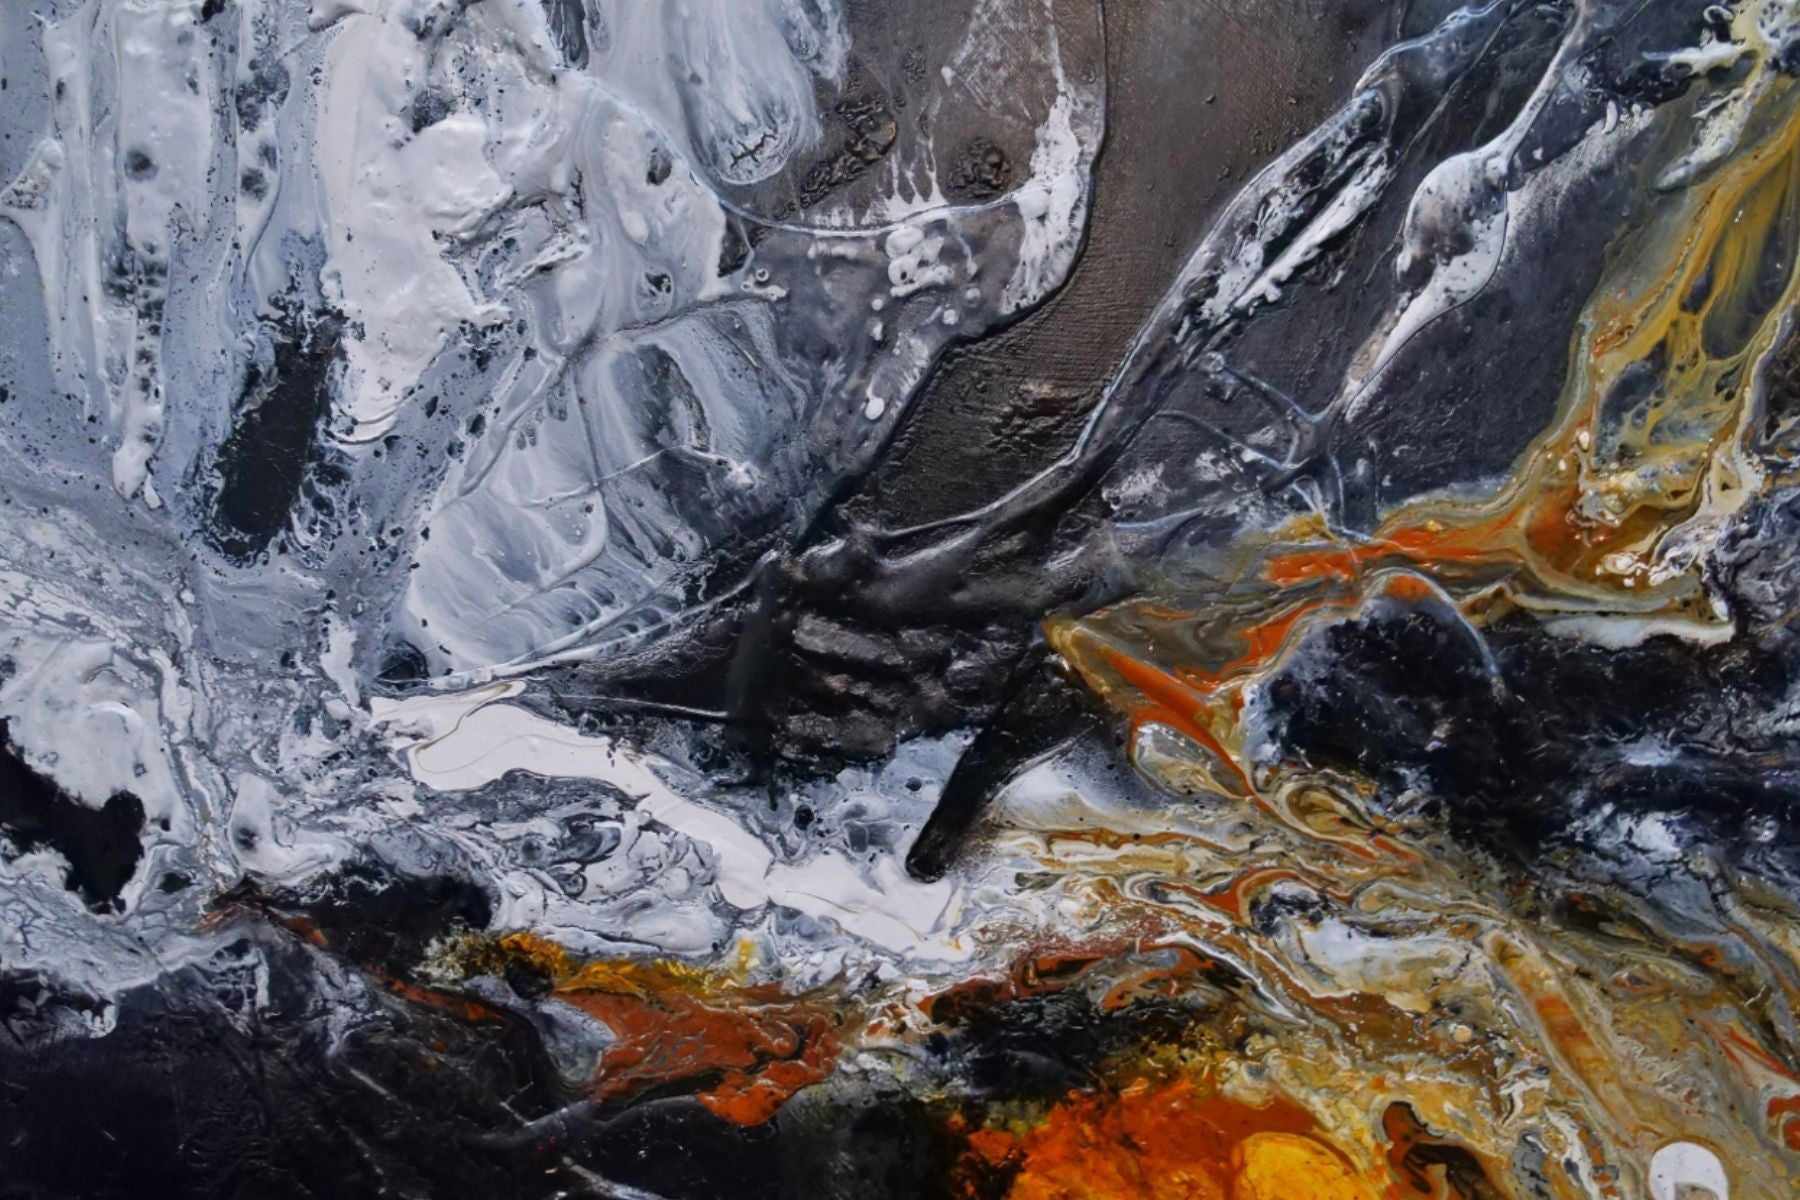 Granite Sienna 190cm x 100cm Black Sienna Textured Abstract Painting (SOLD)